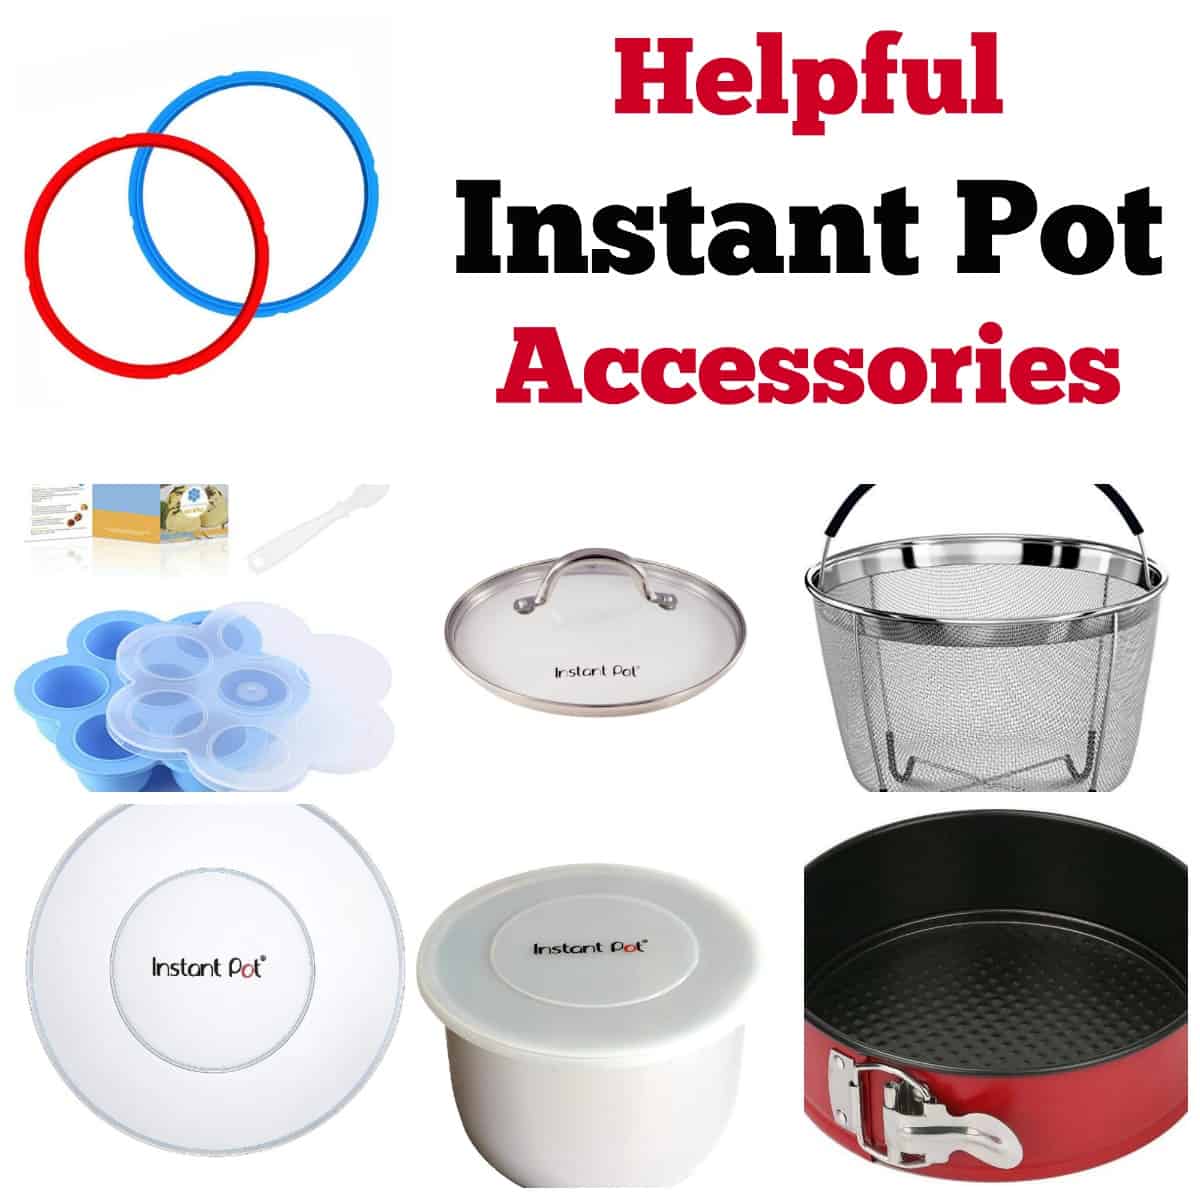 https://simple-nourished-living.com/wp-content/uploads/2020/02/Helpful-Instant-Pot-Accessories.jpg